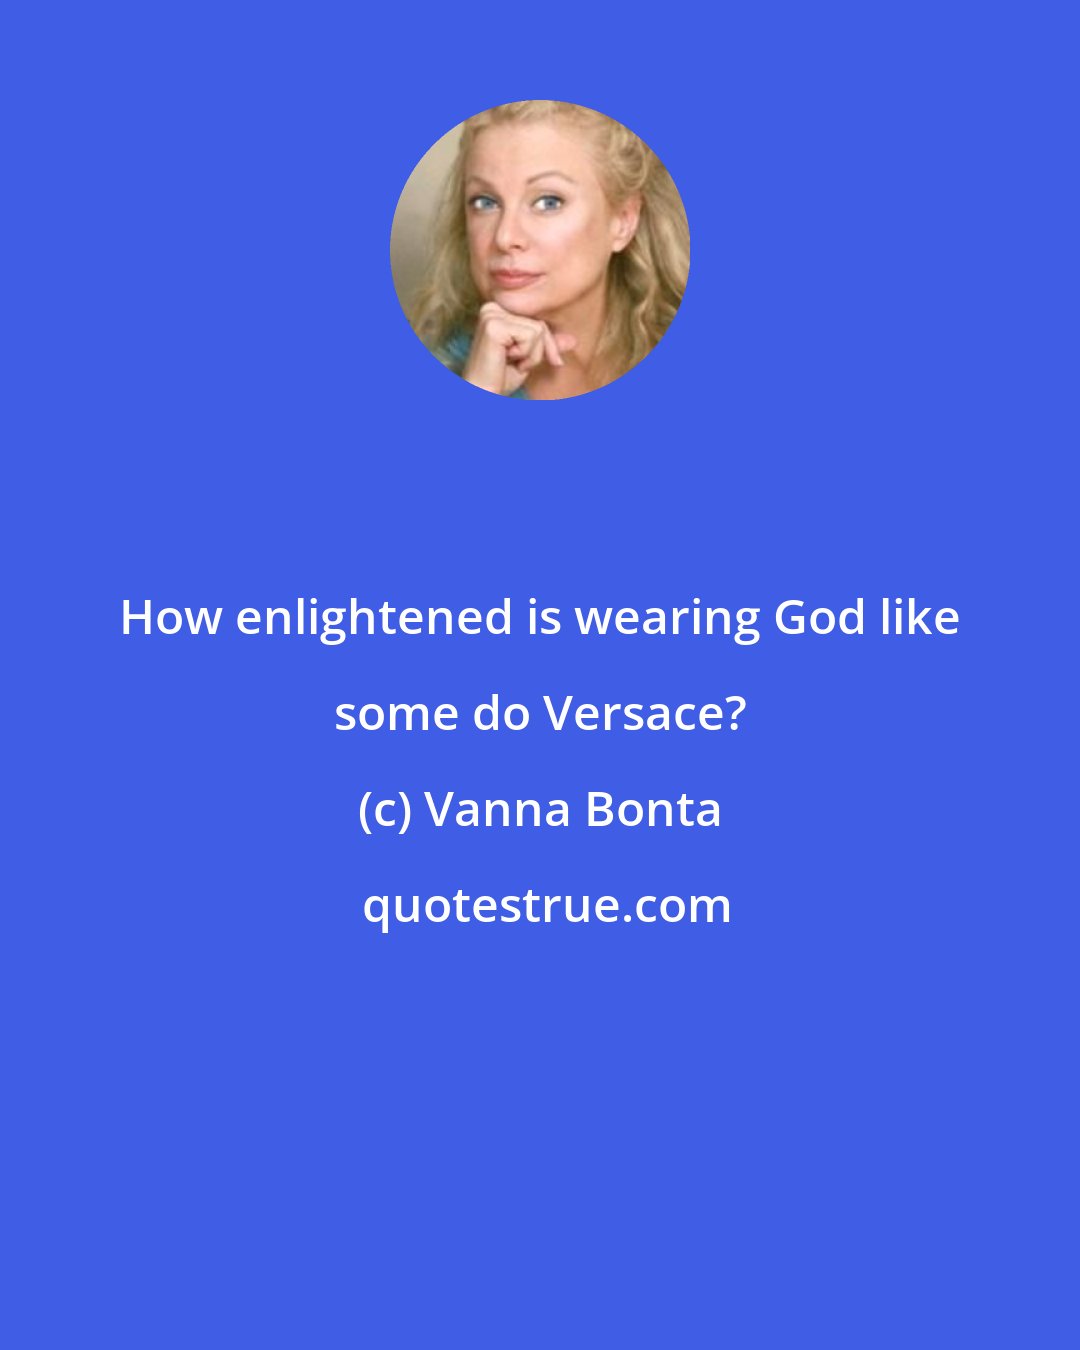 Vanna Bonta: How enlightened is wearing God like some do Versace?